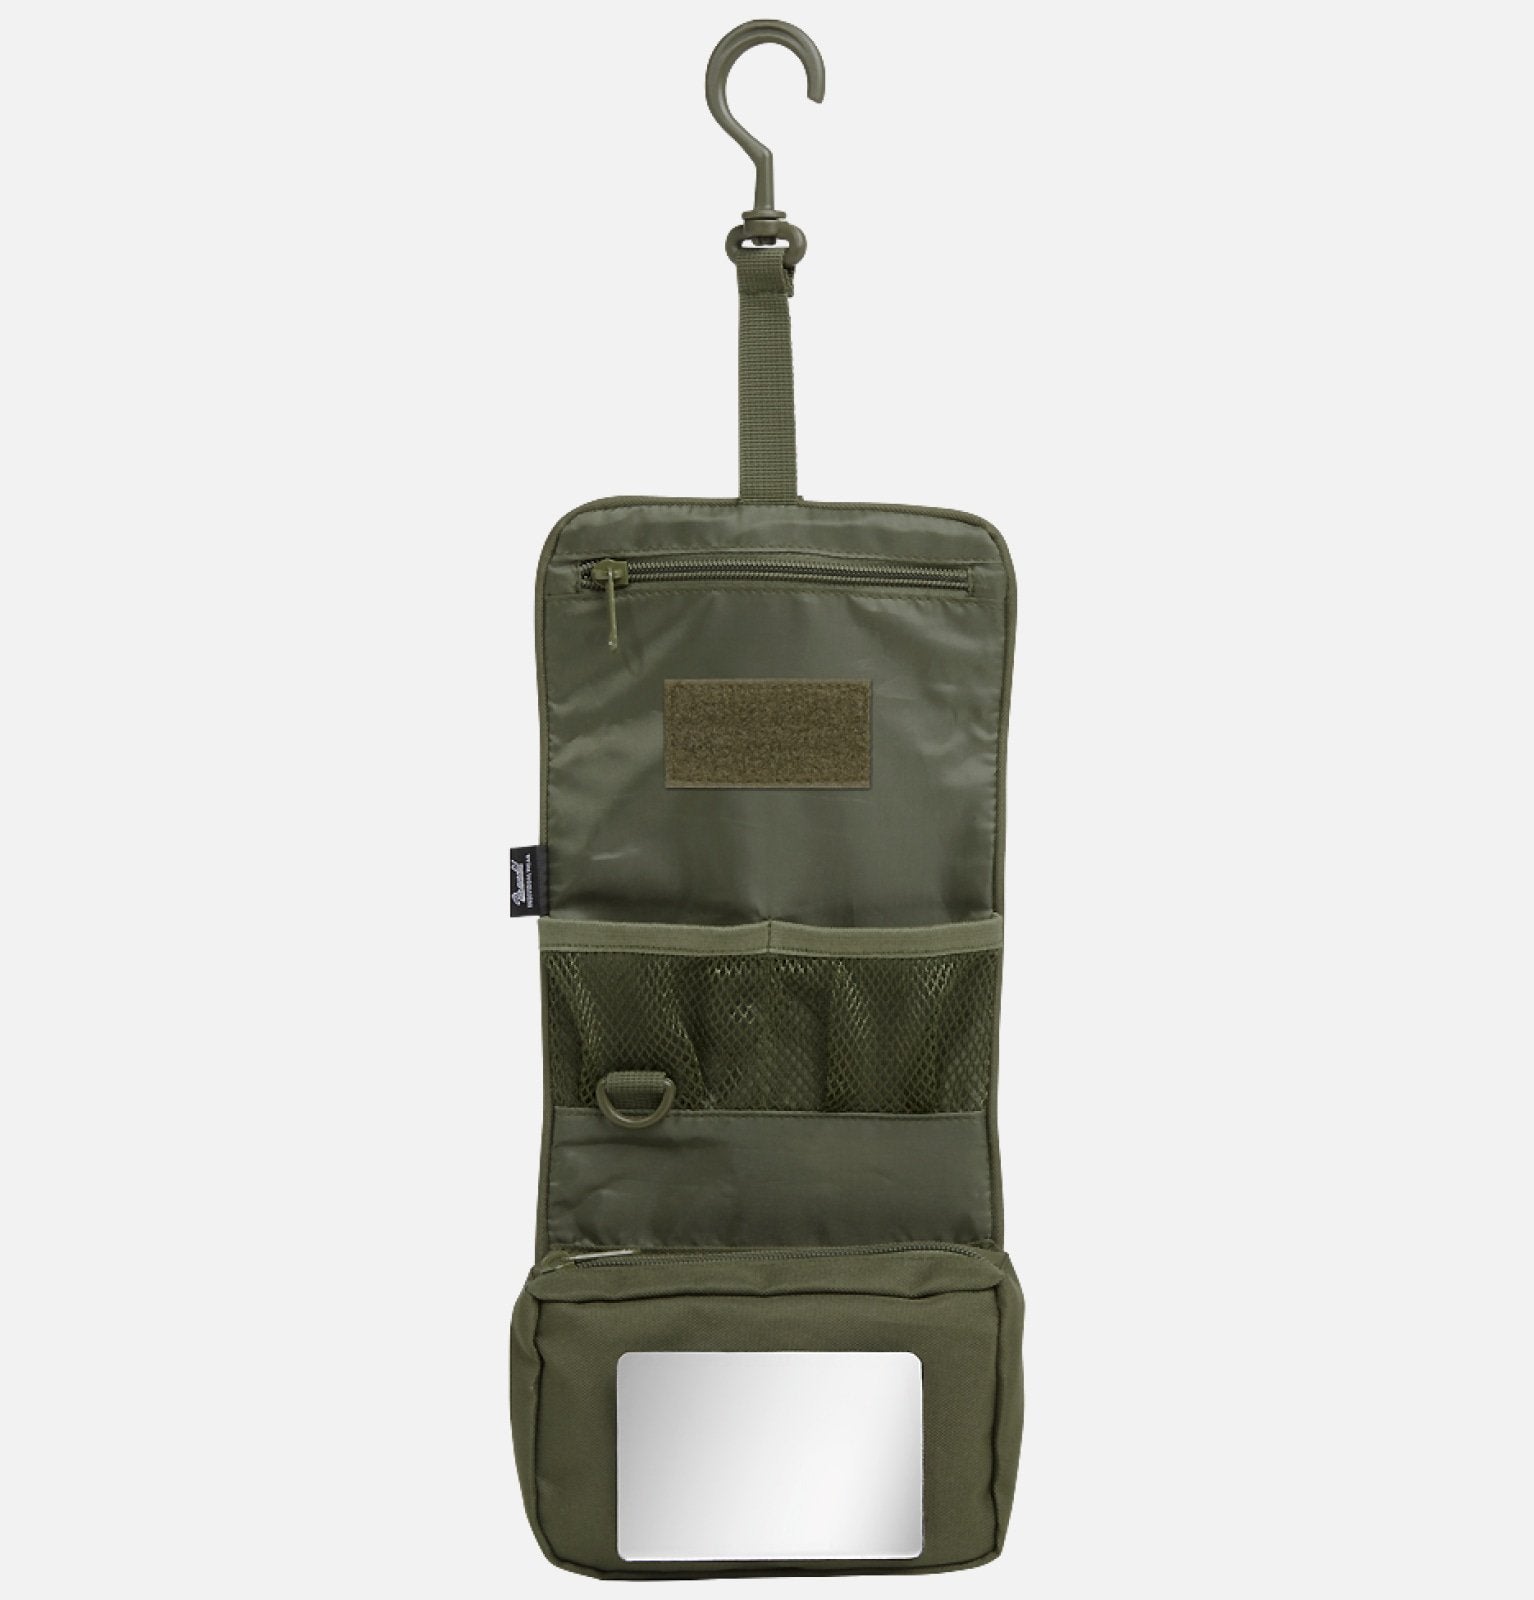 Camping/Festival Toiletry Bag medium